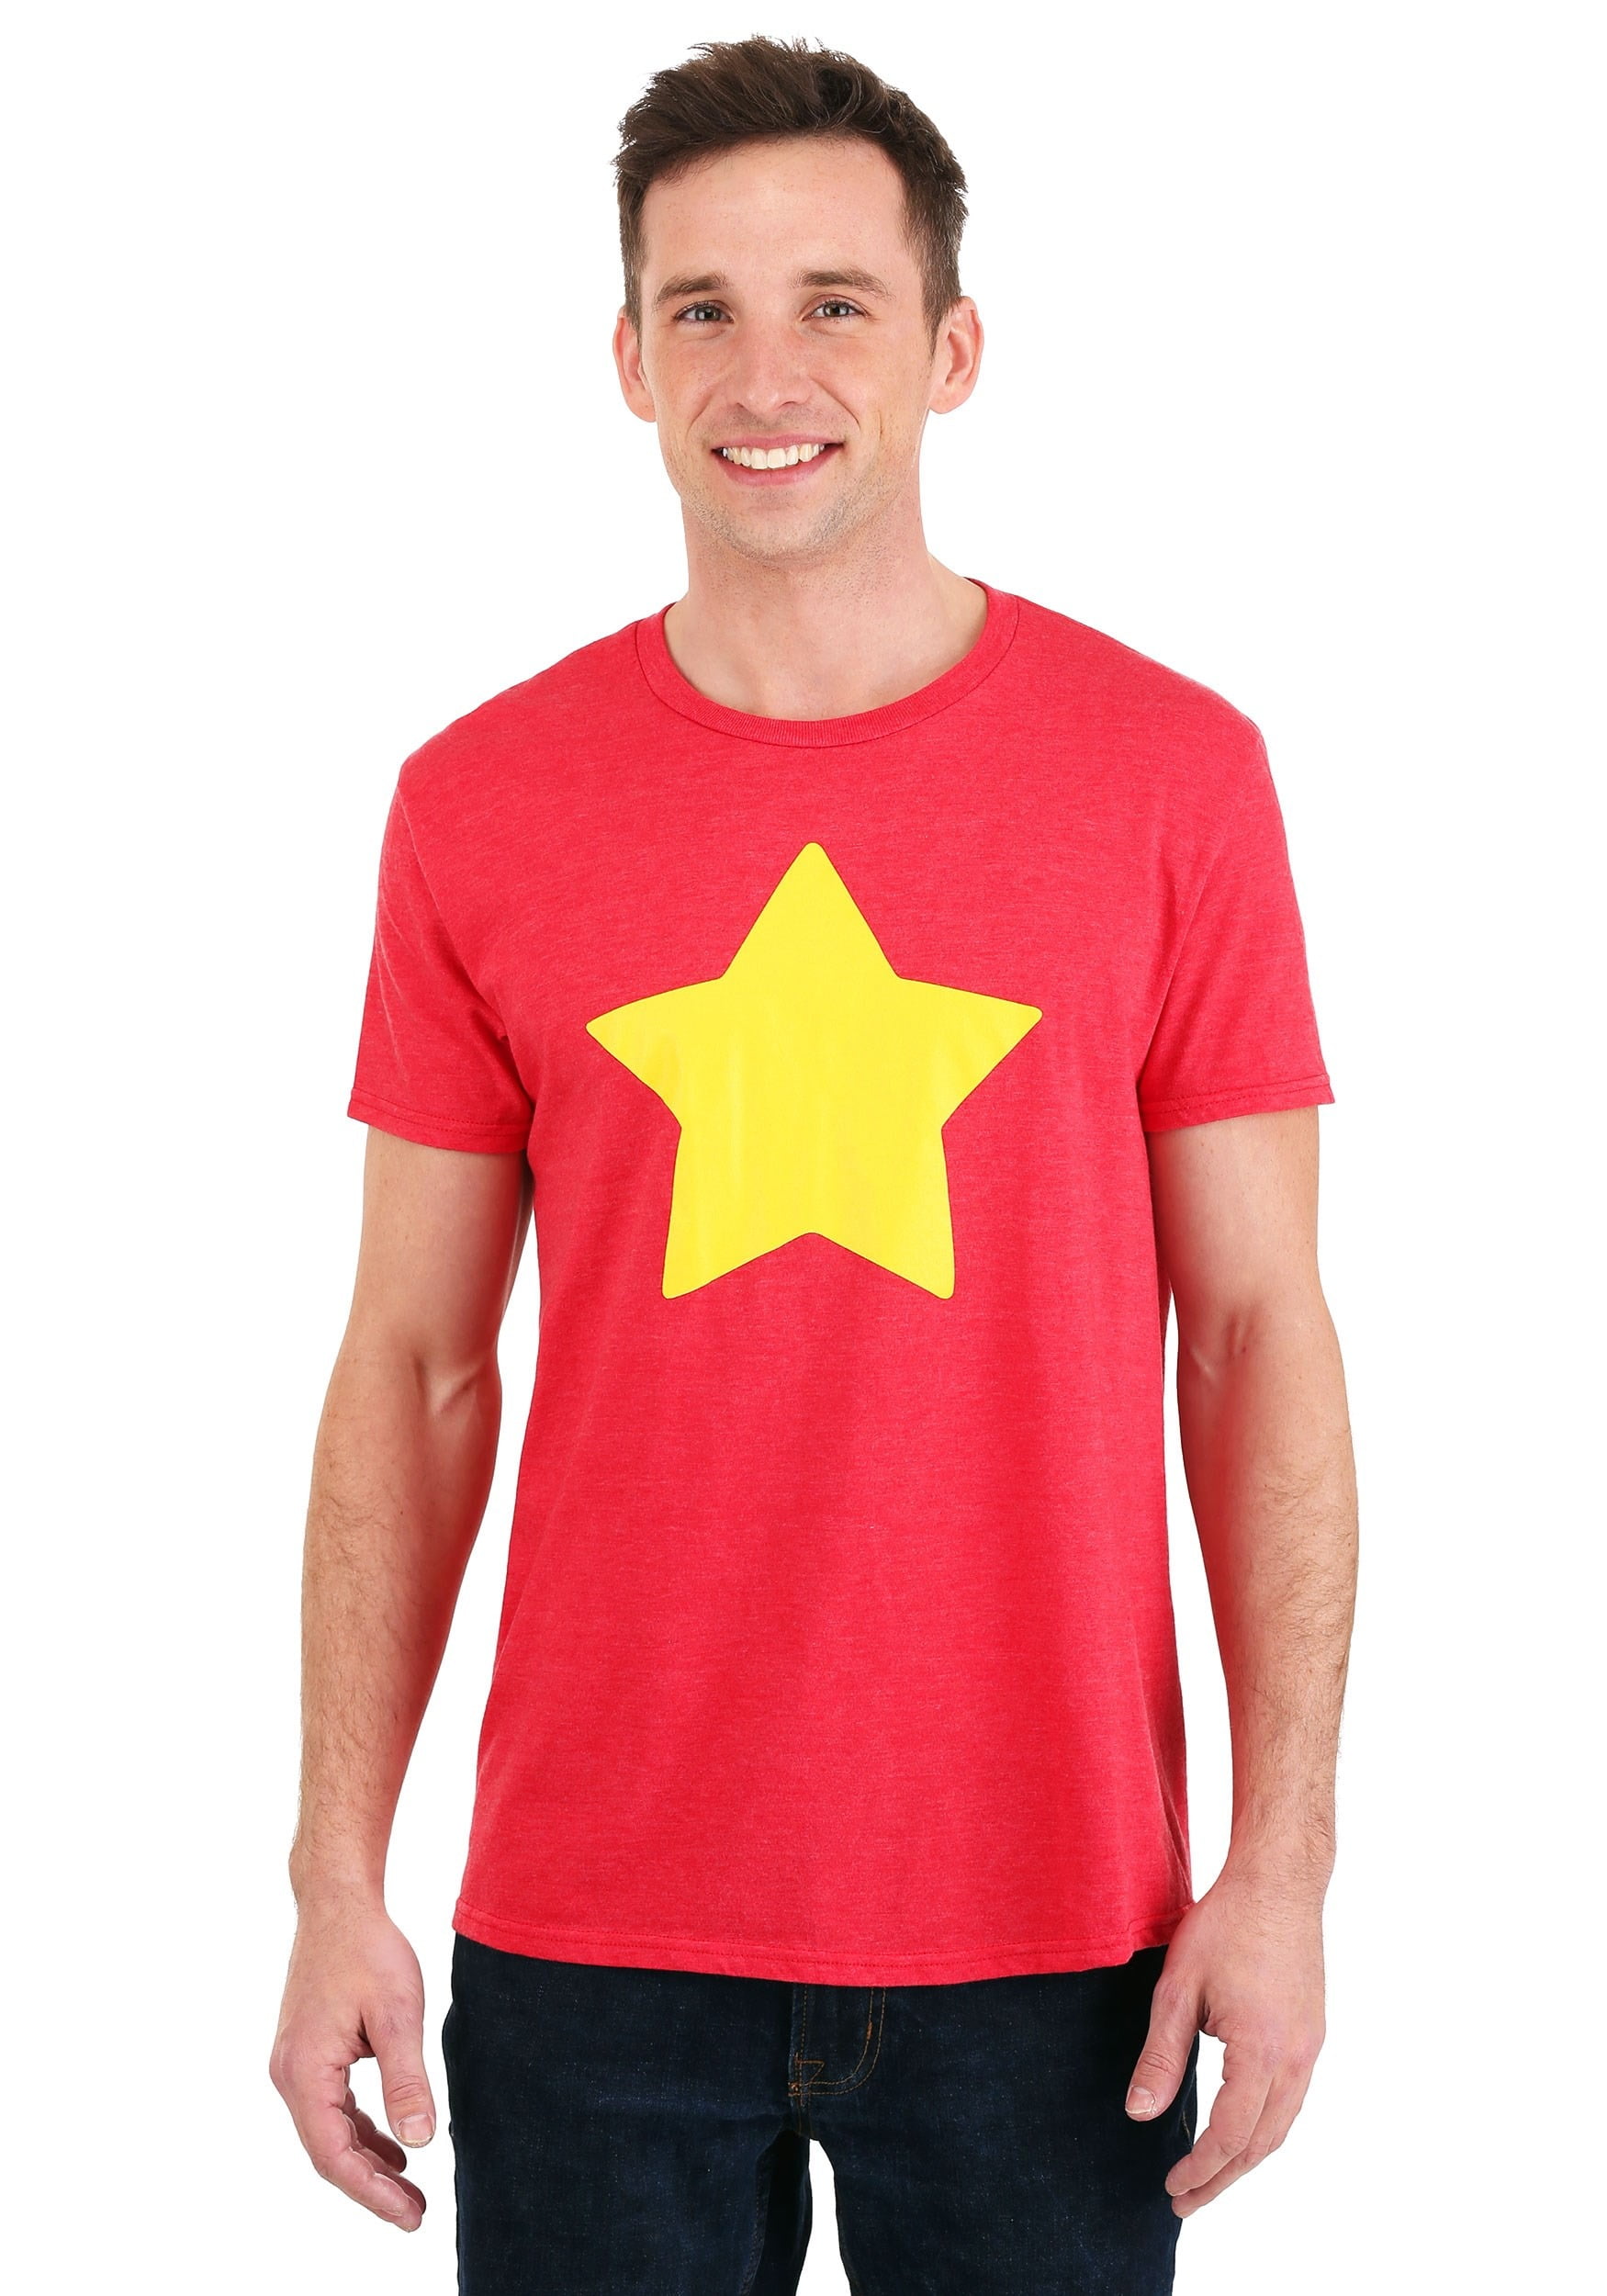 Child Kids Steven Universe YELLOW STAR Tshirt T-shirt Tee Top shirt Adult 